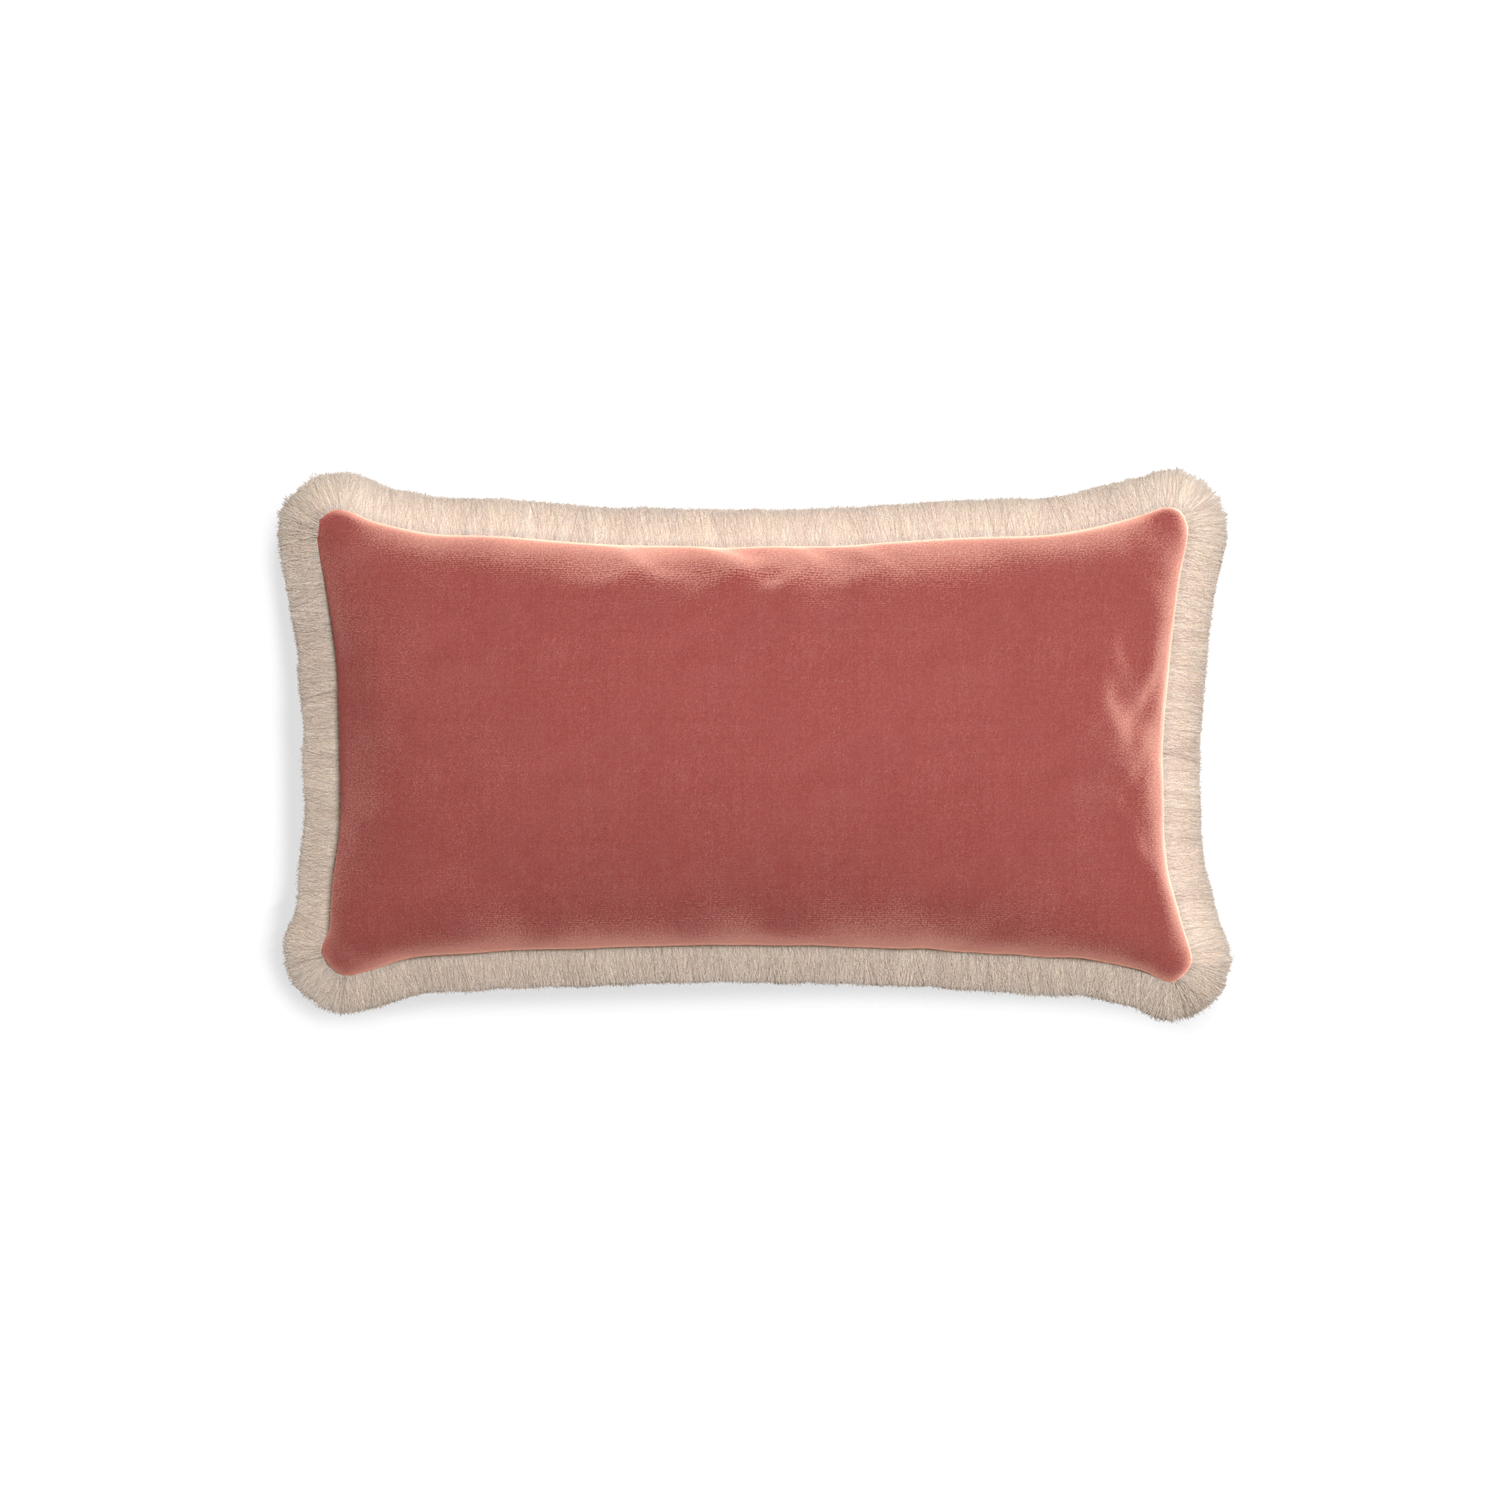 rectangle coral velvet pillow with cream fringe